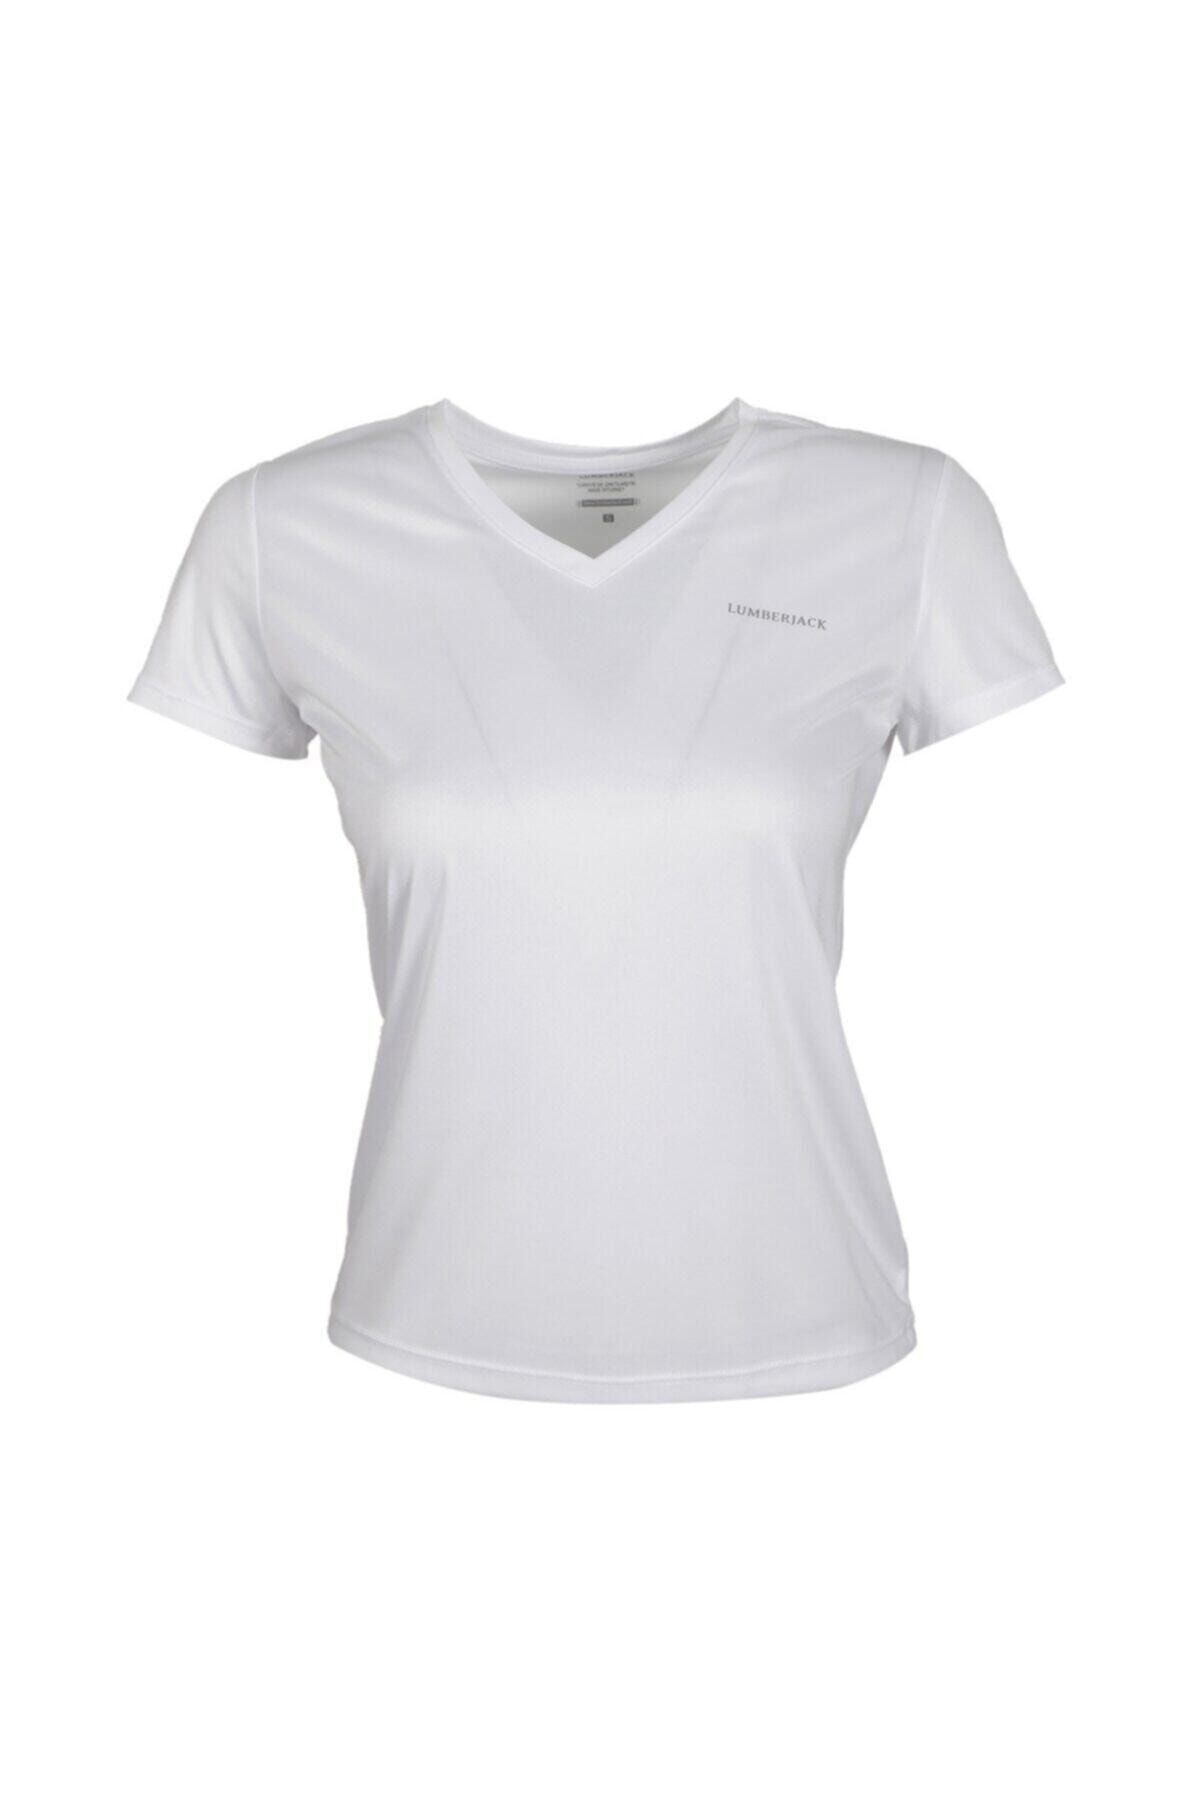 Lumberjack CT127 BASIC PES V NECK T- Beyaz Kadın T-Shirt 100581816